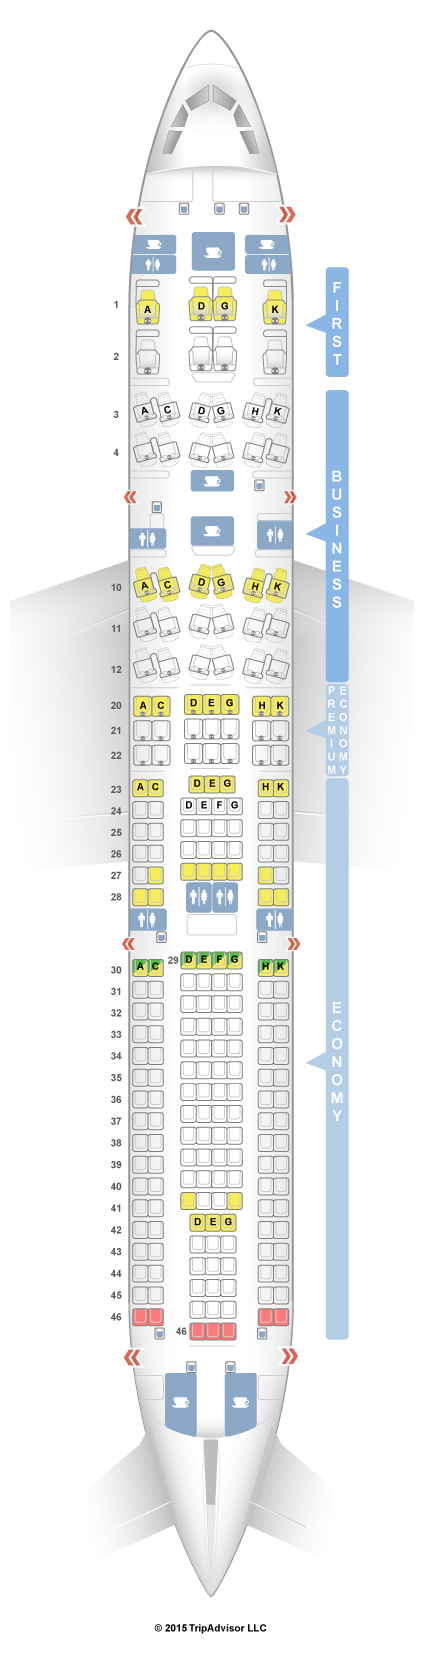 Seatguru Seat Map Lufthansa Airbus A330 300 333 V1 Seatguru